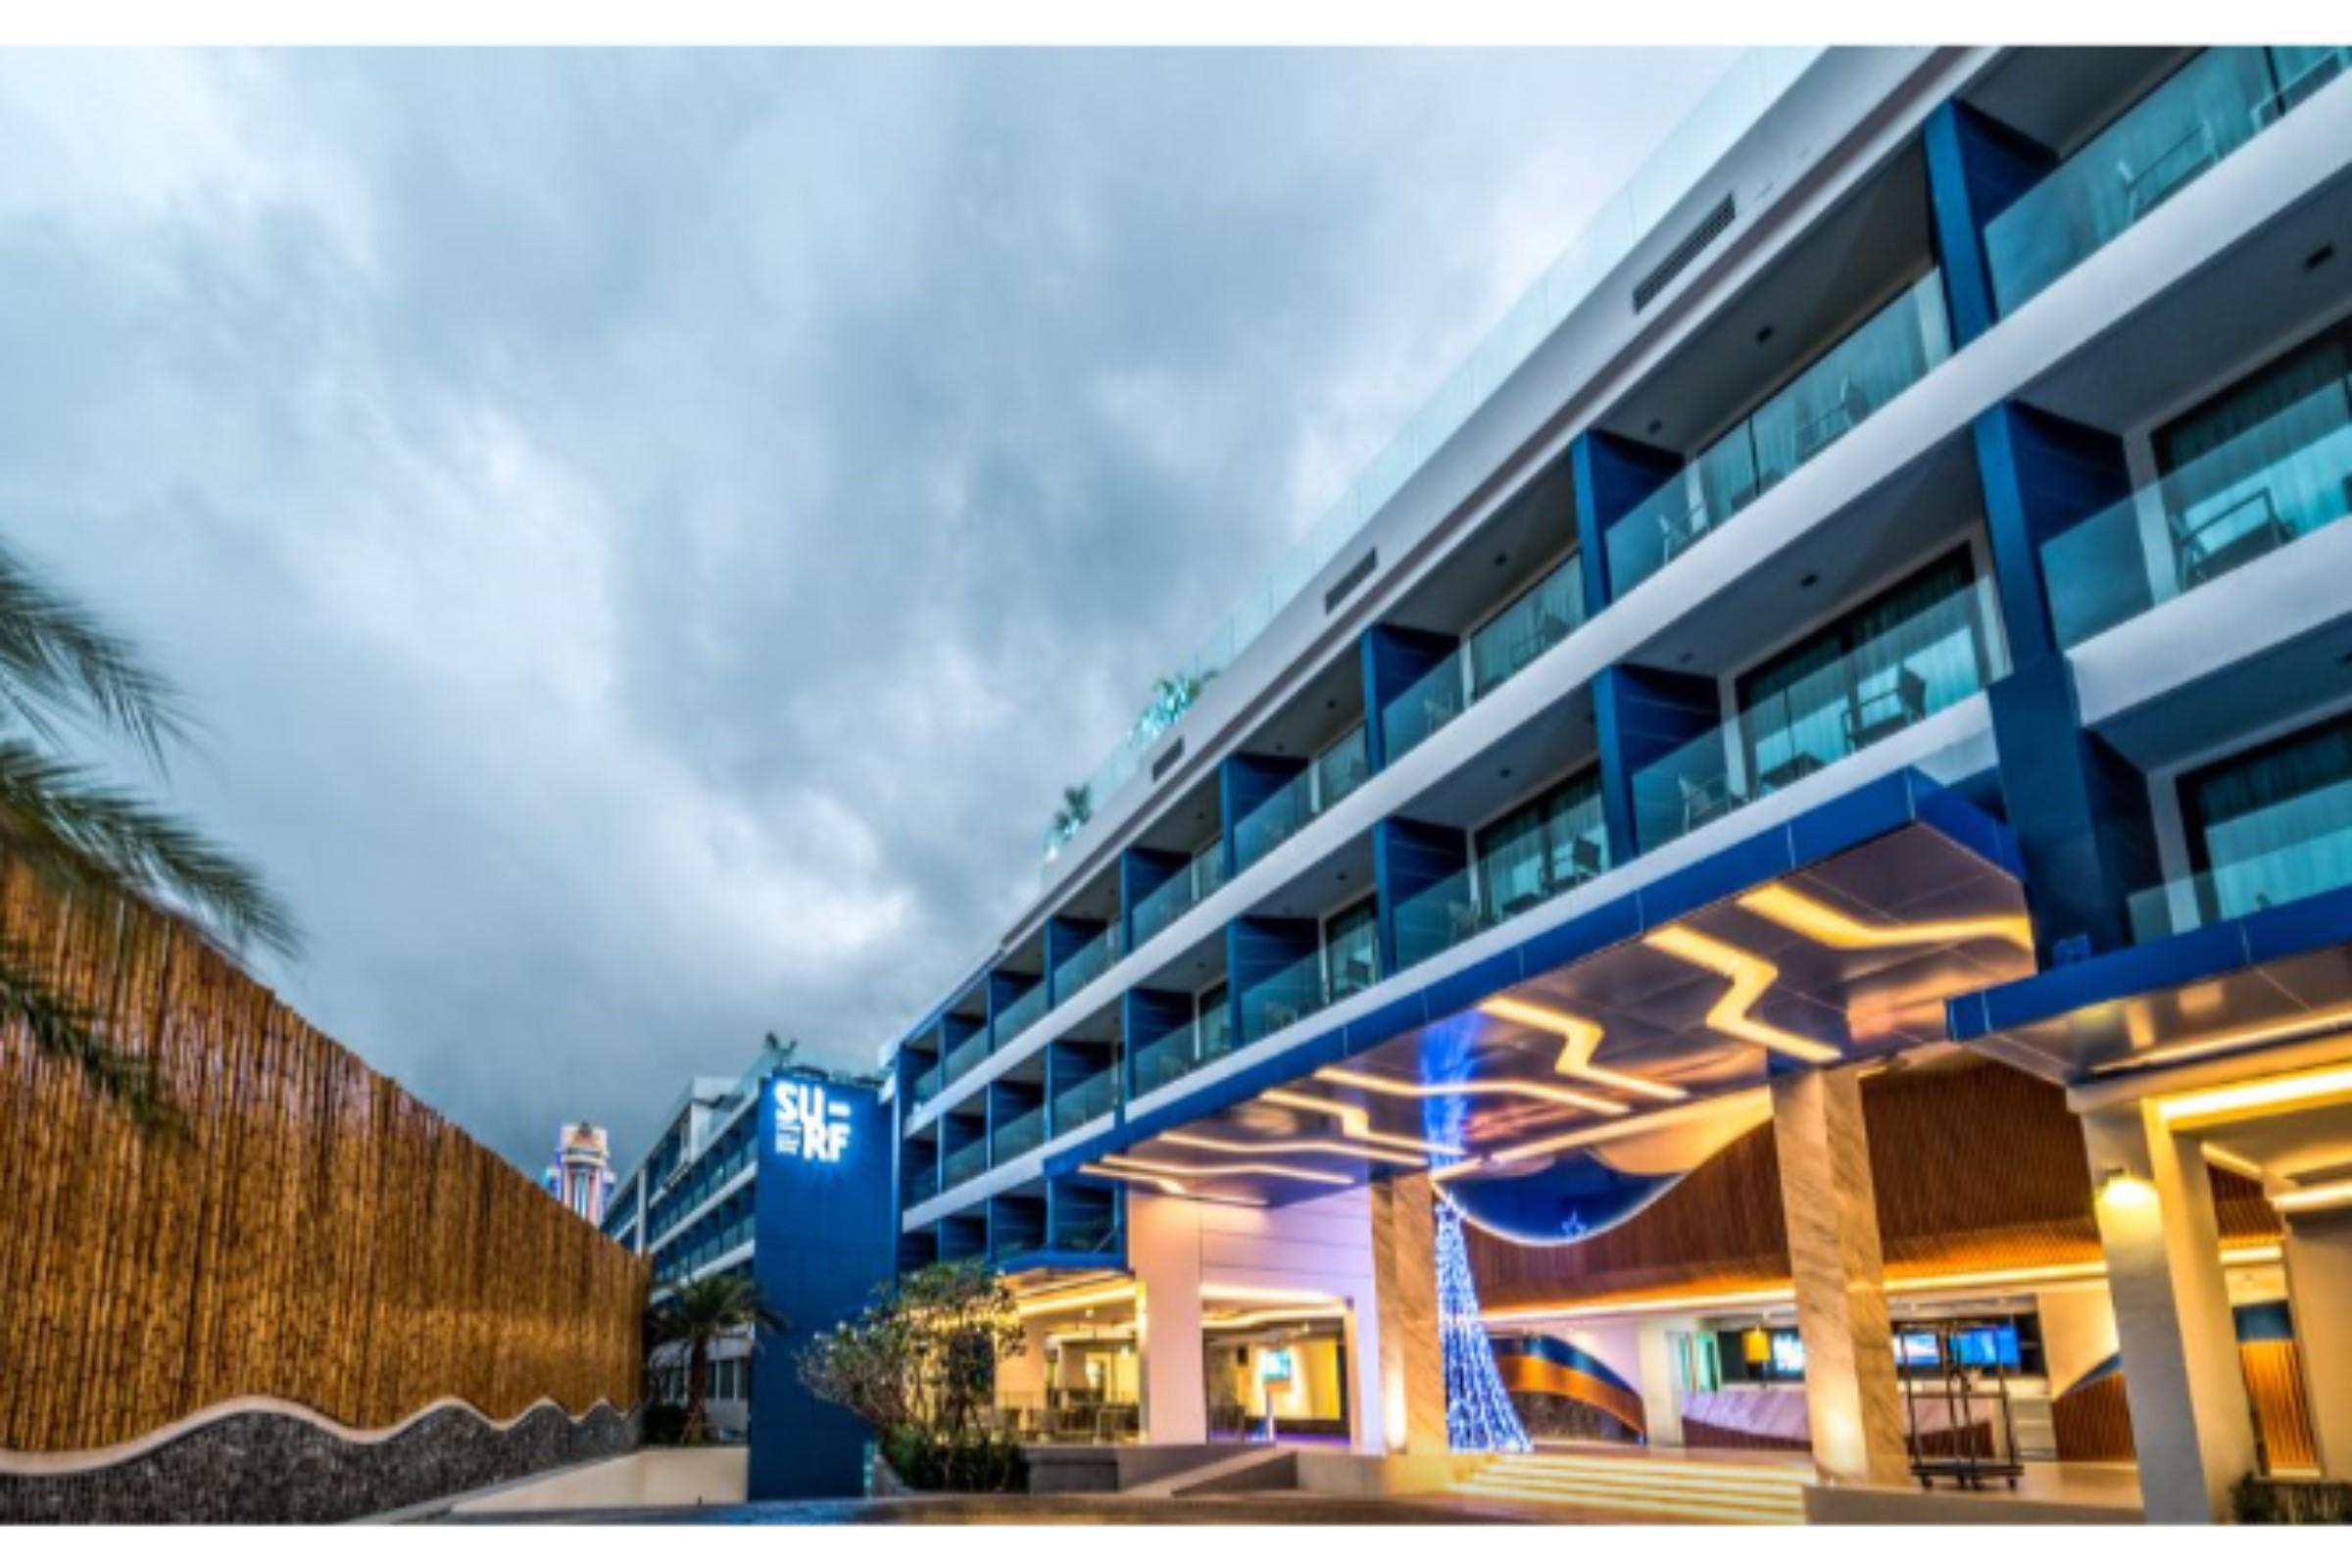 Hotel Clover Patong Phuket - Sha Plus Экстерьер фото